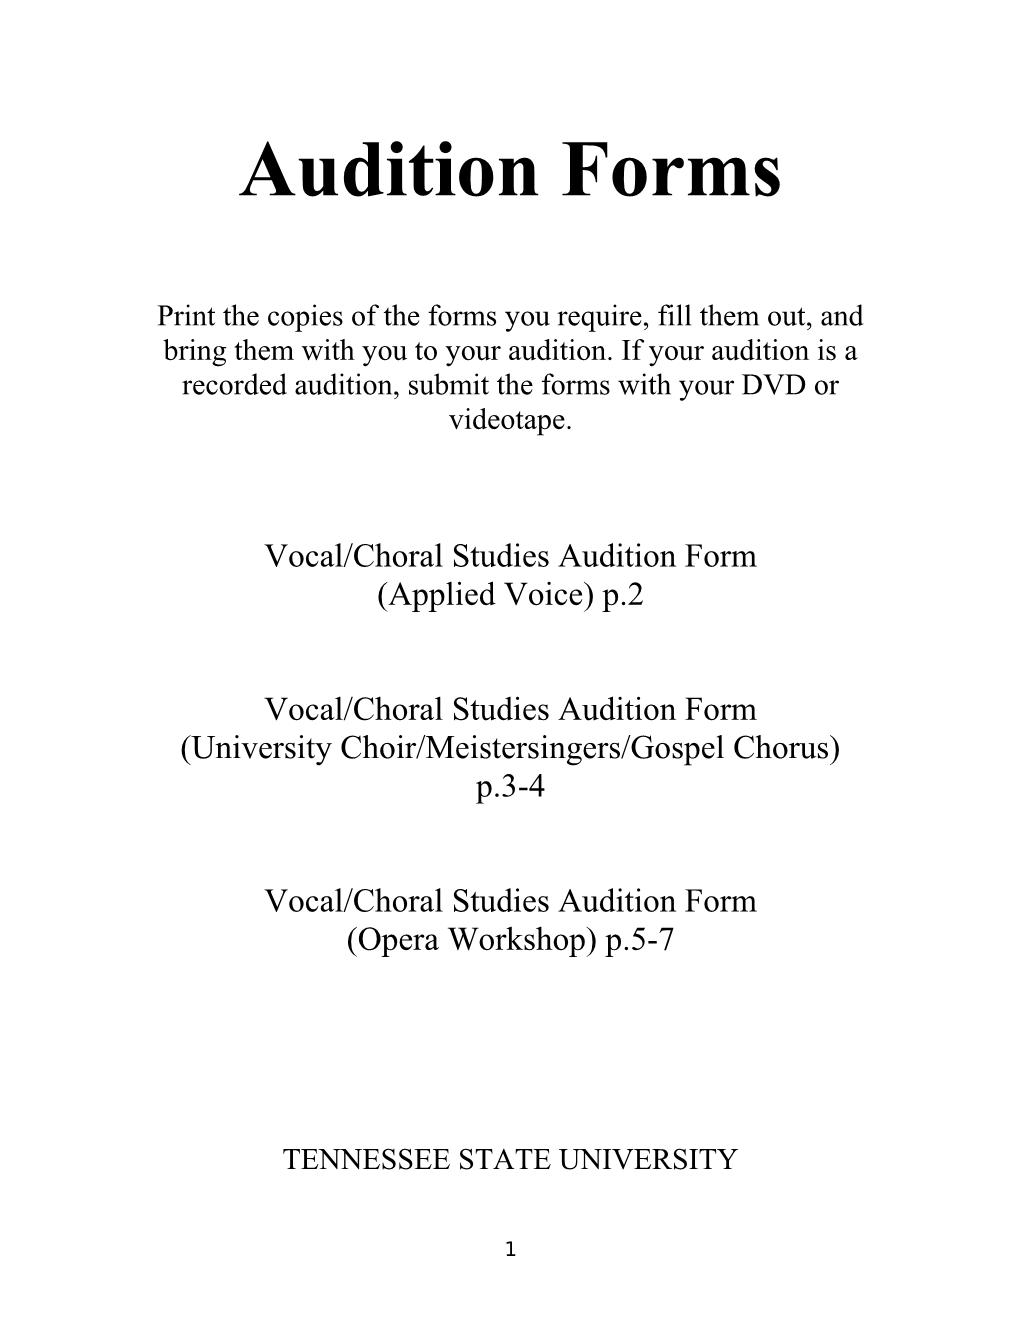 Vocal/Choral Studies Audition Form